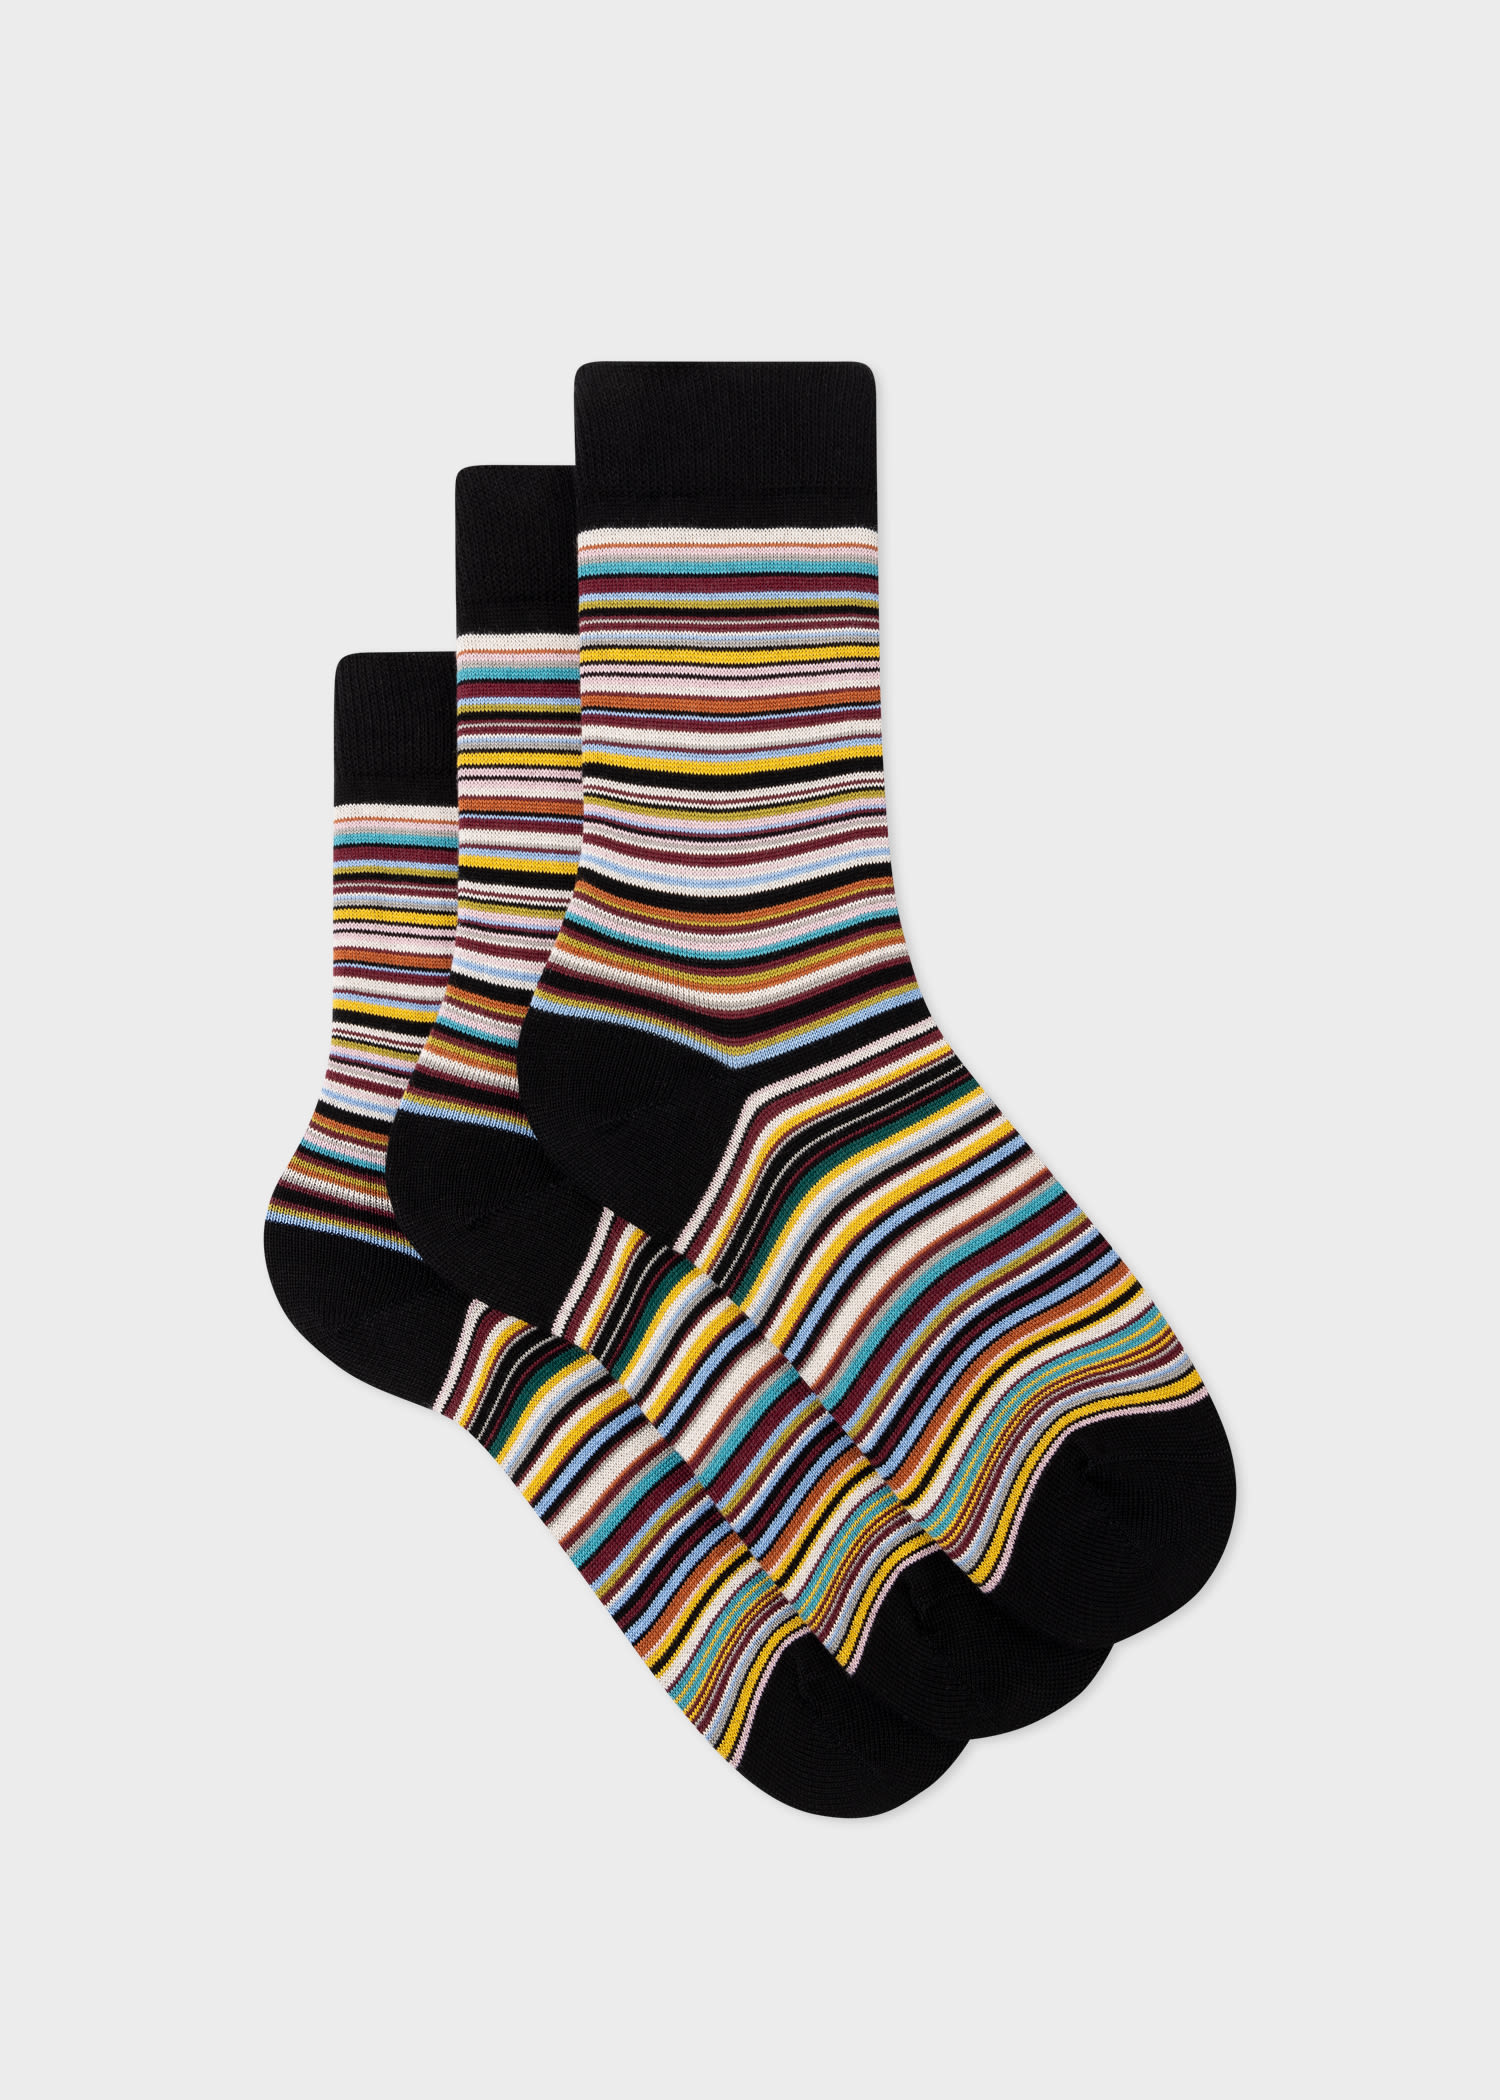 Paul Smith Women's 'signature Stripe' Socks Three Pack Multicolour